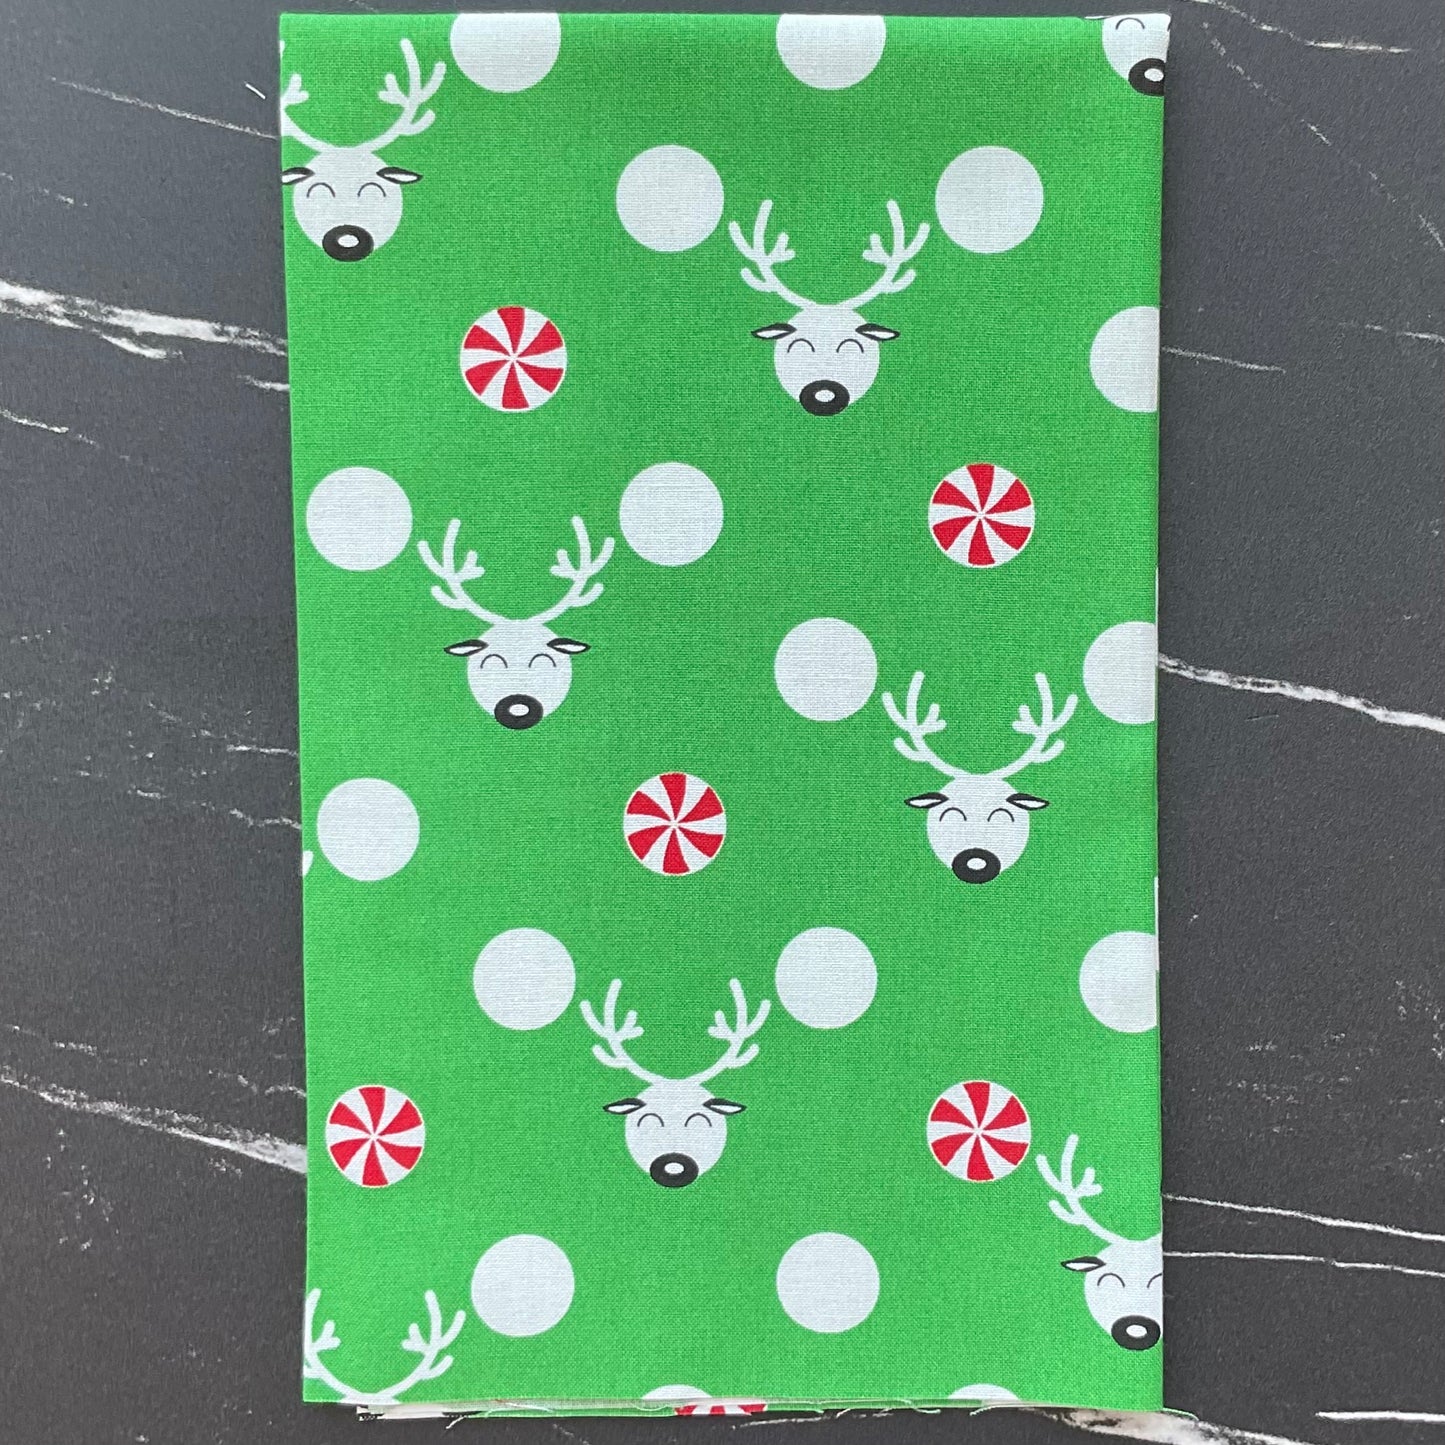 Reindeer Games by Me and My Sister Designs - Reindeer Dots - Evergreen 22440 12